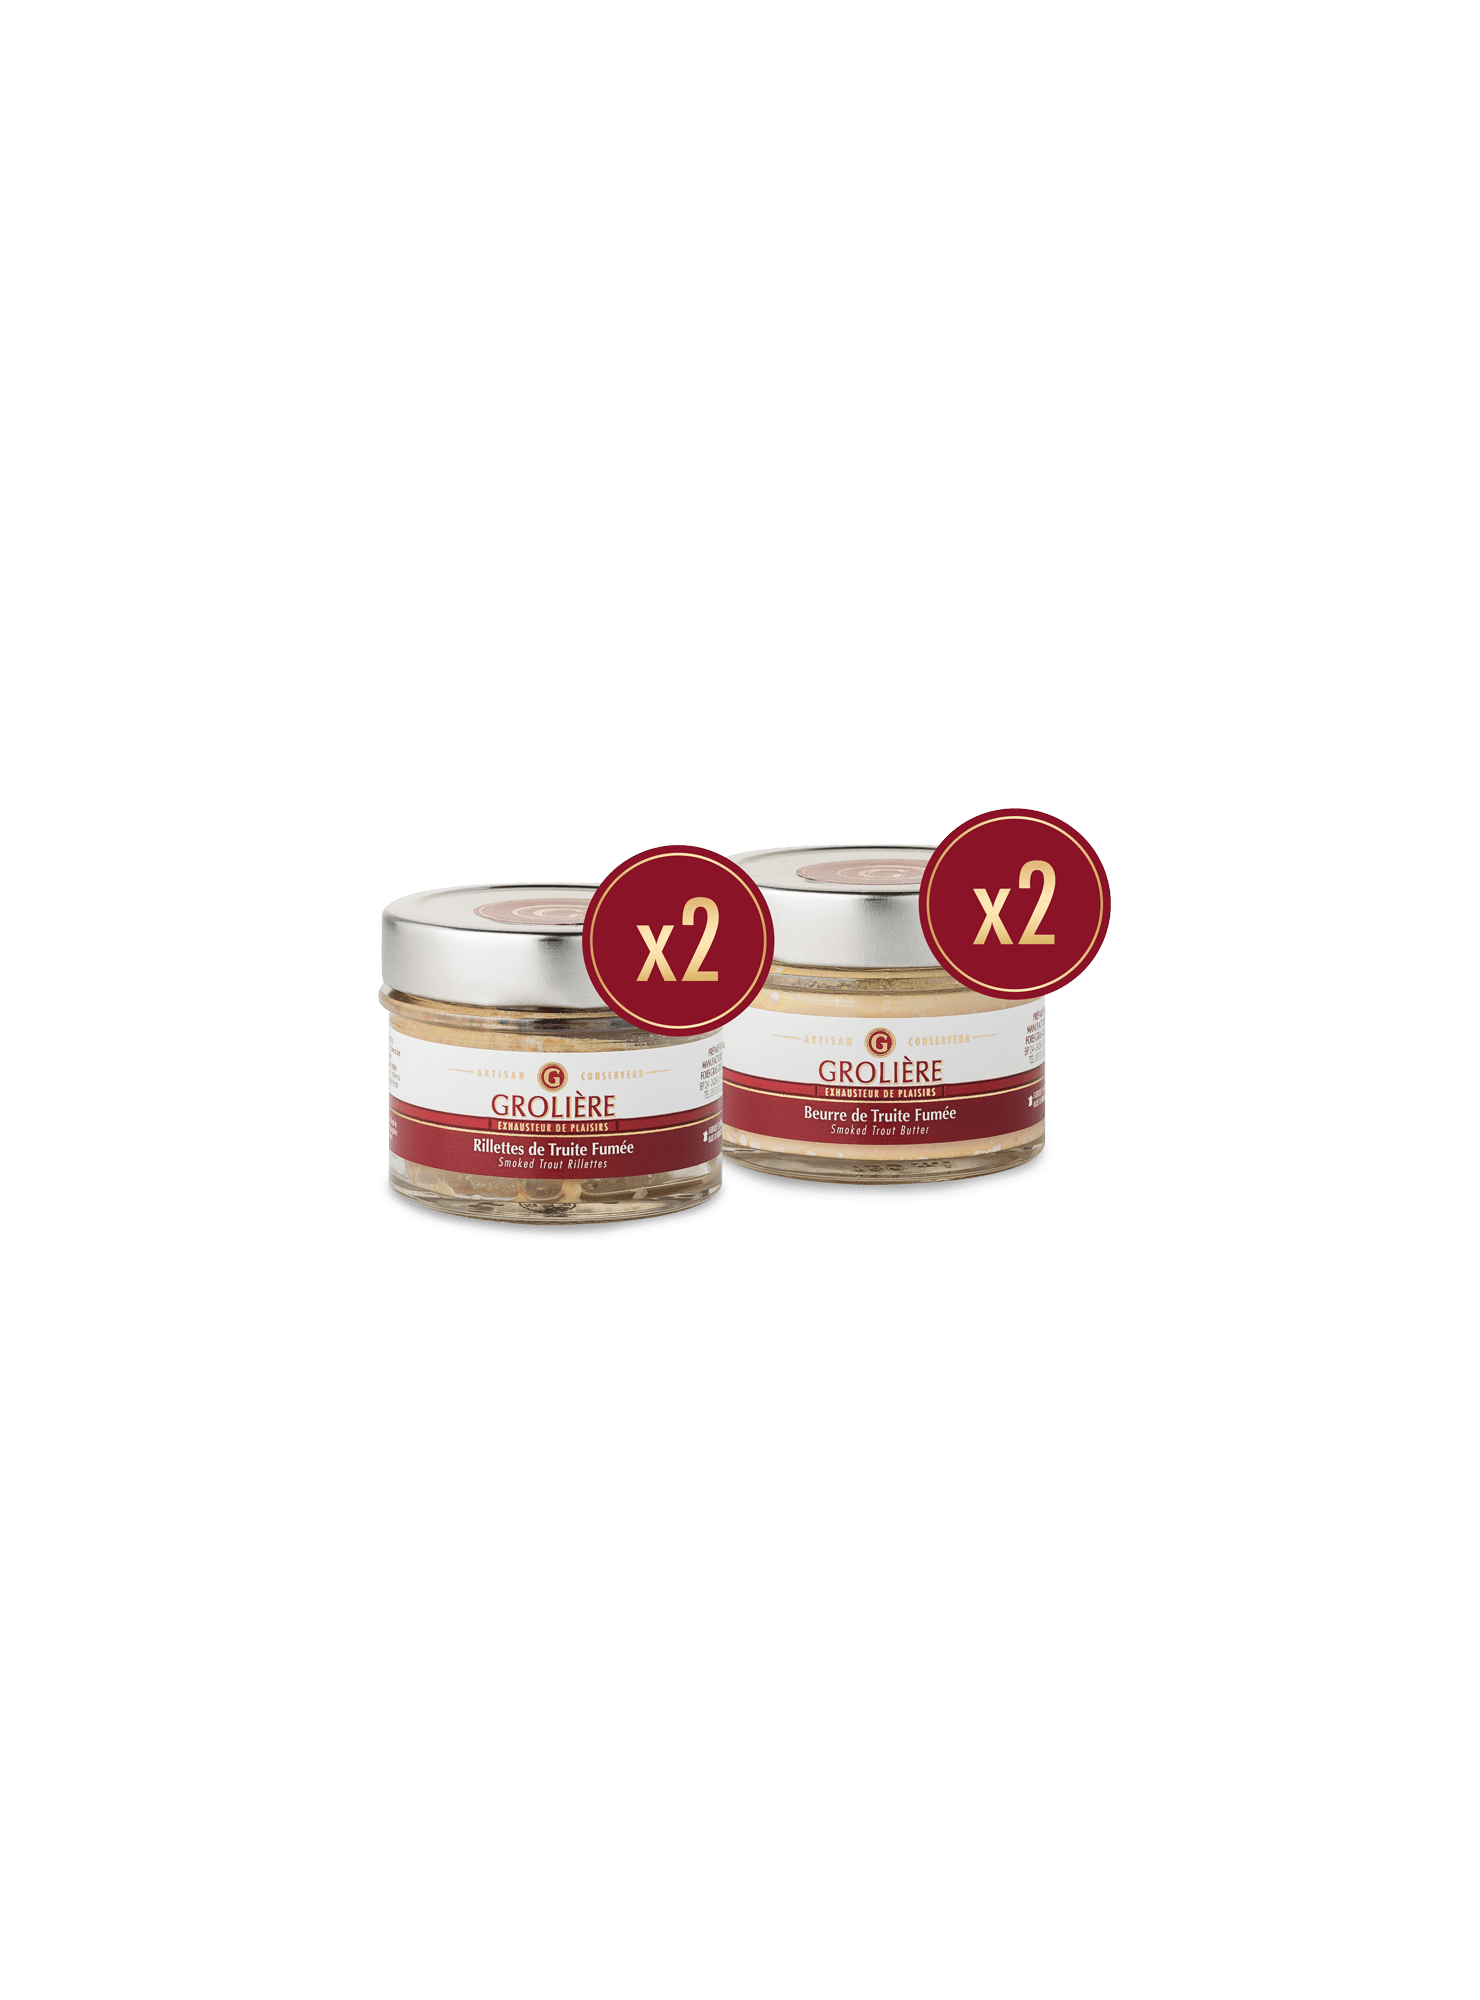 Assortiment-2-beurre-2-rillettes-truite-fumee